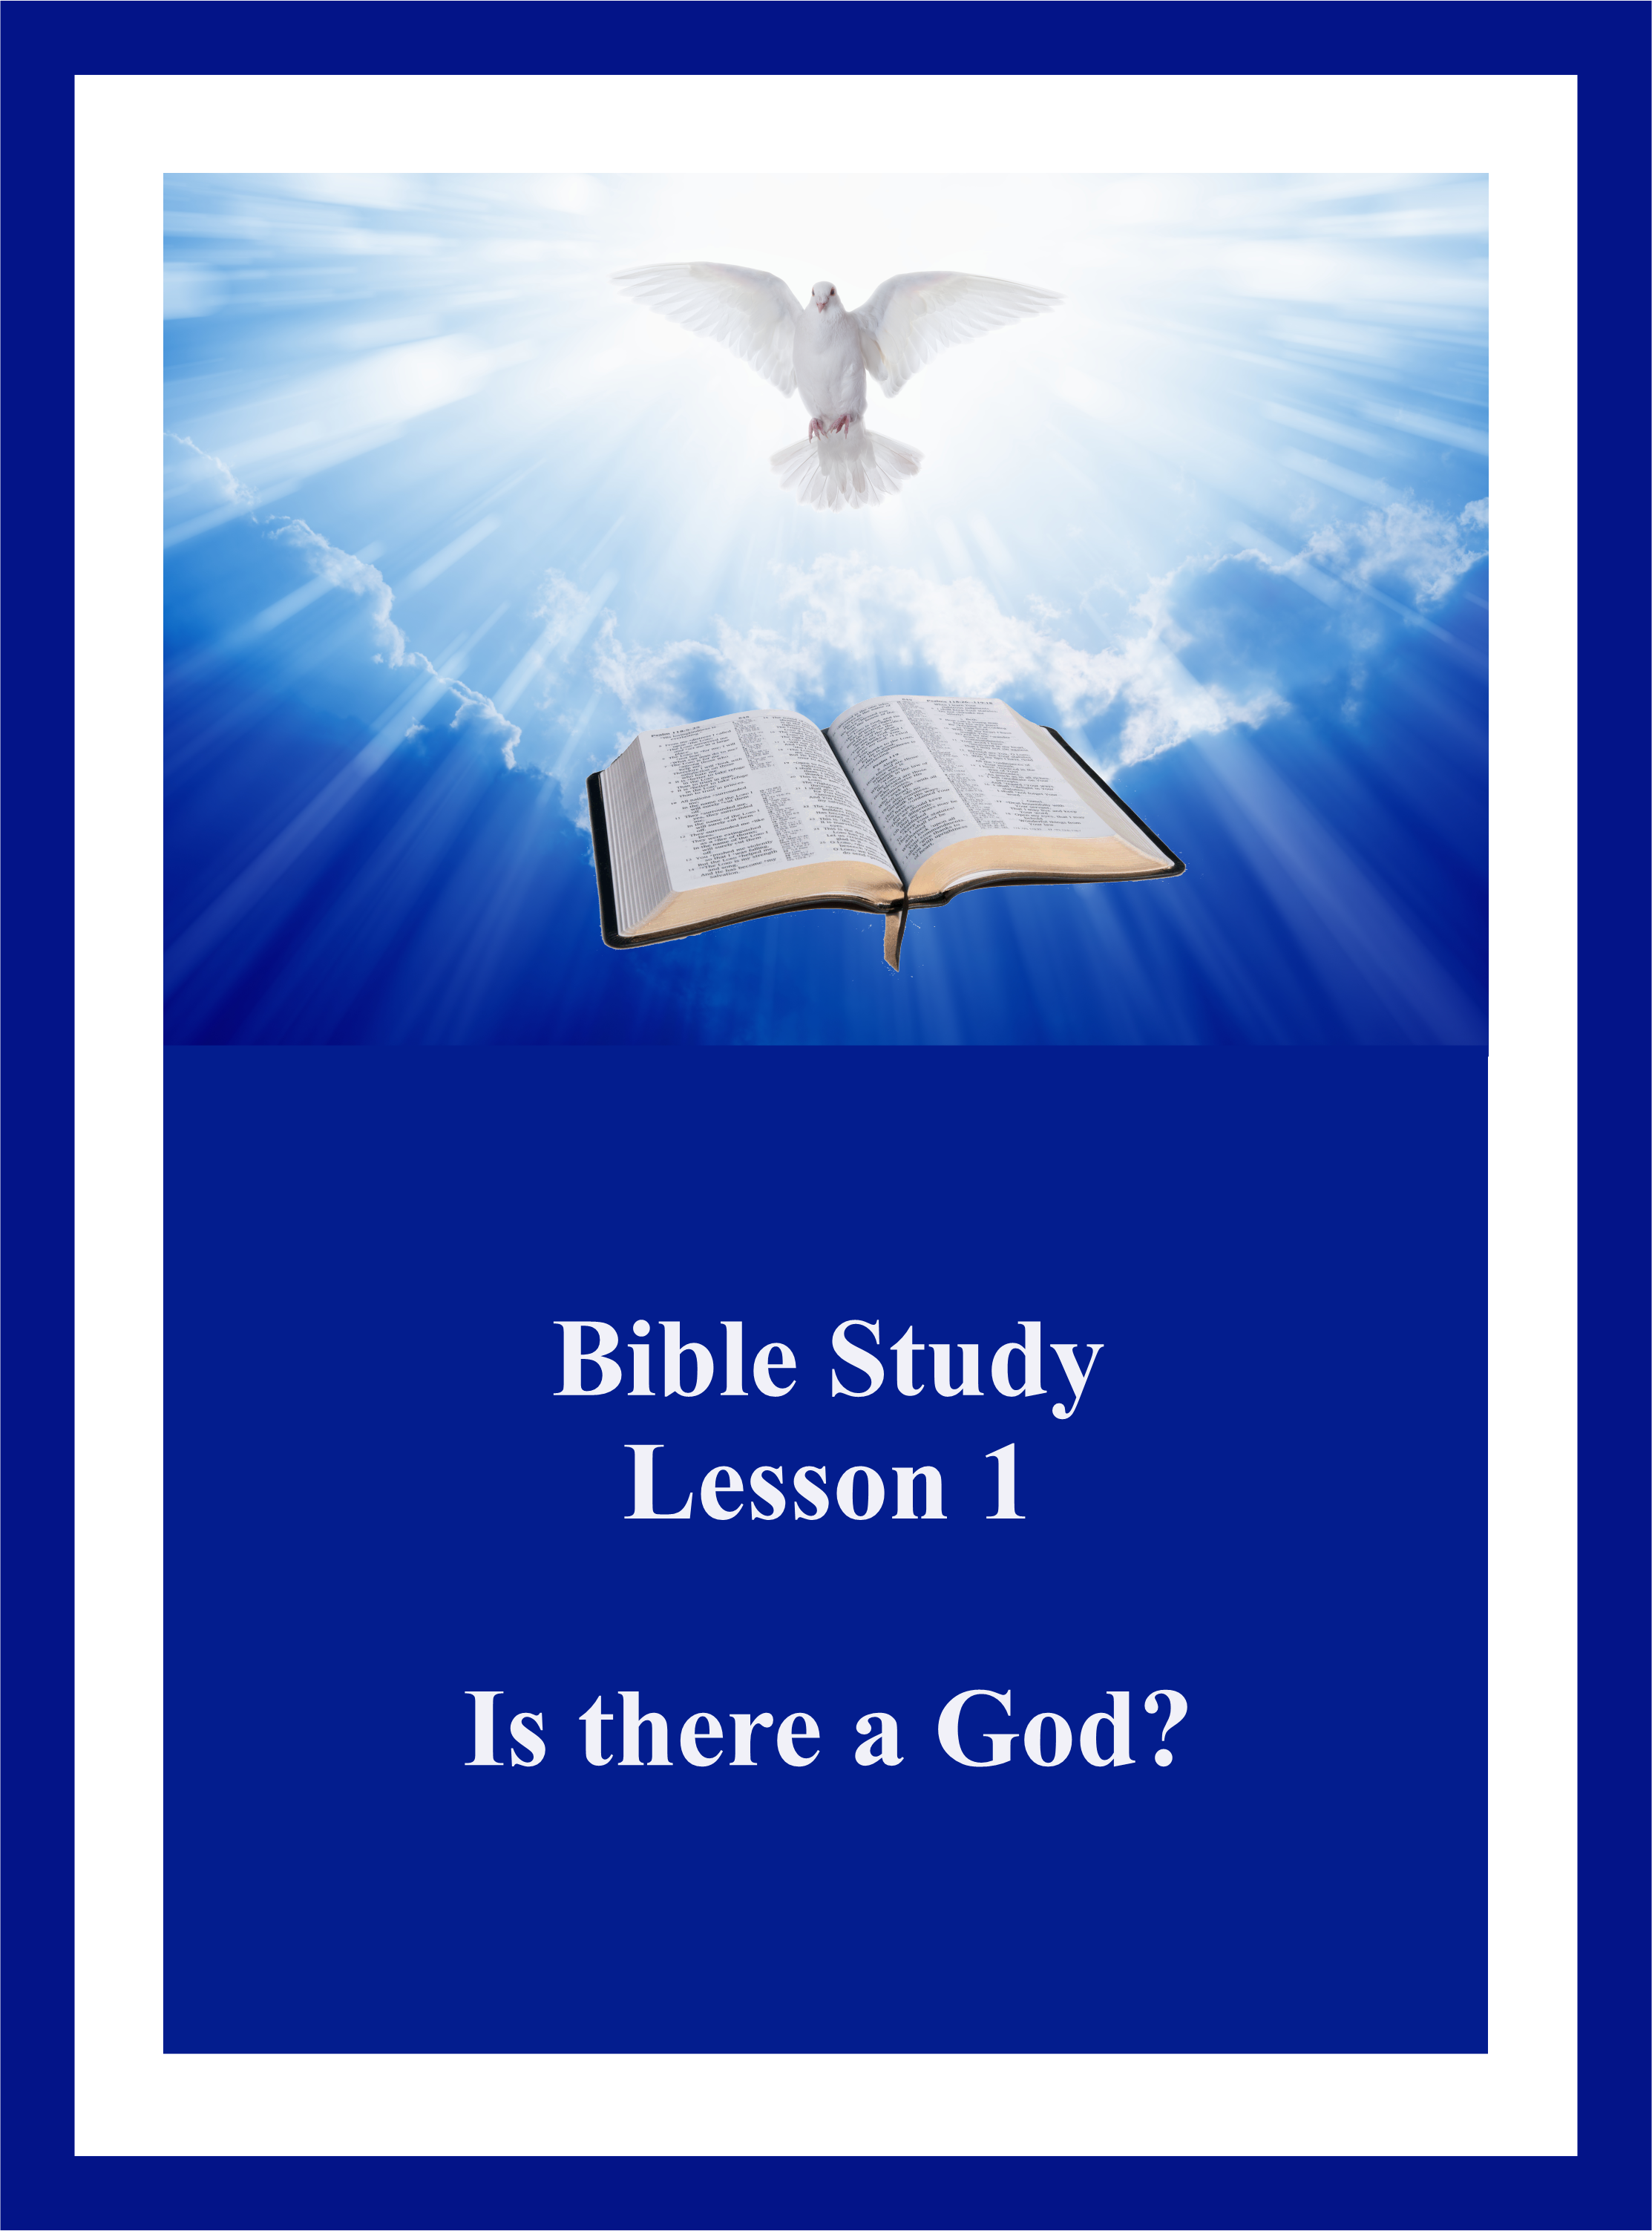 Bible Study 1